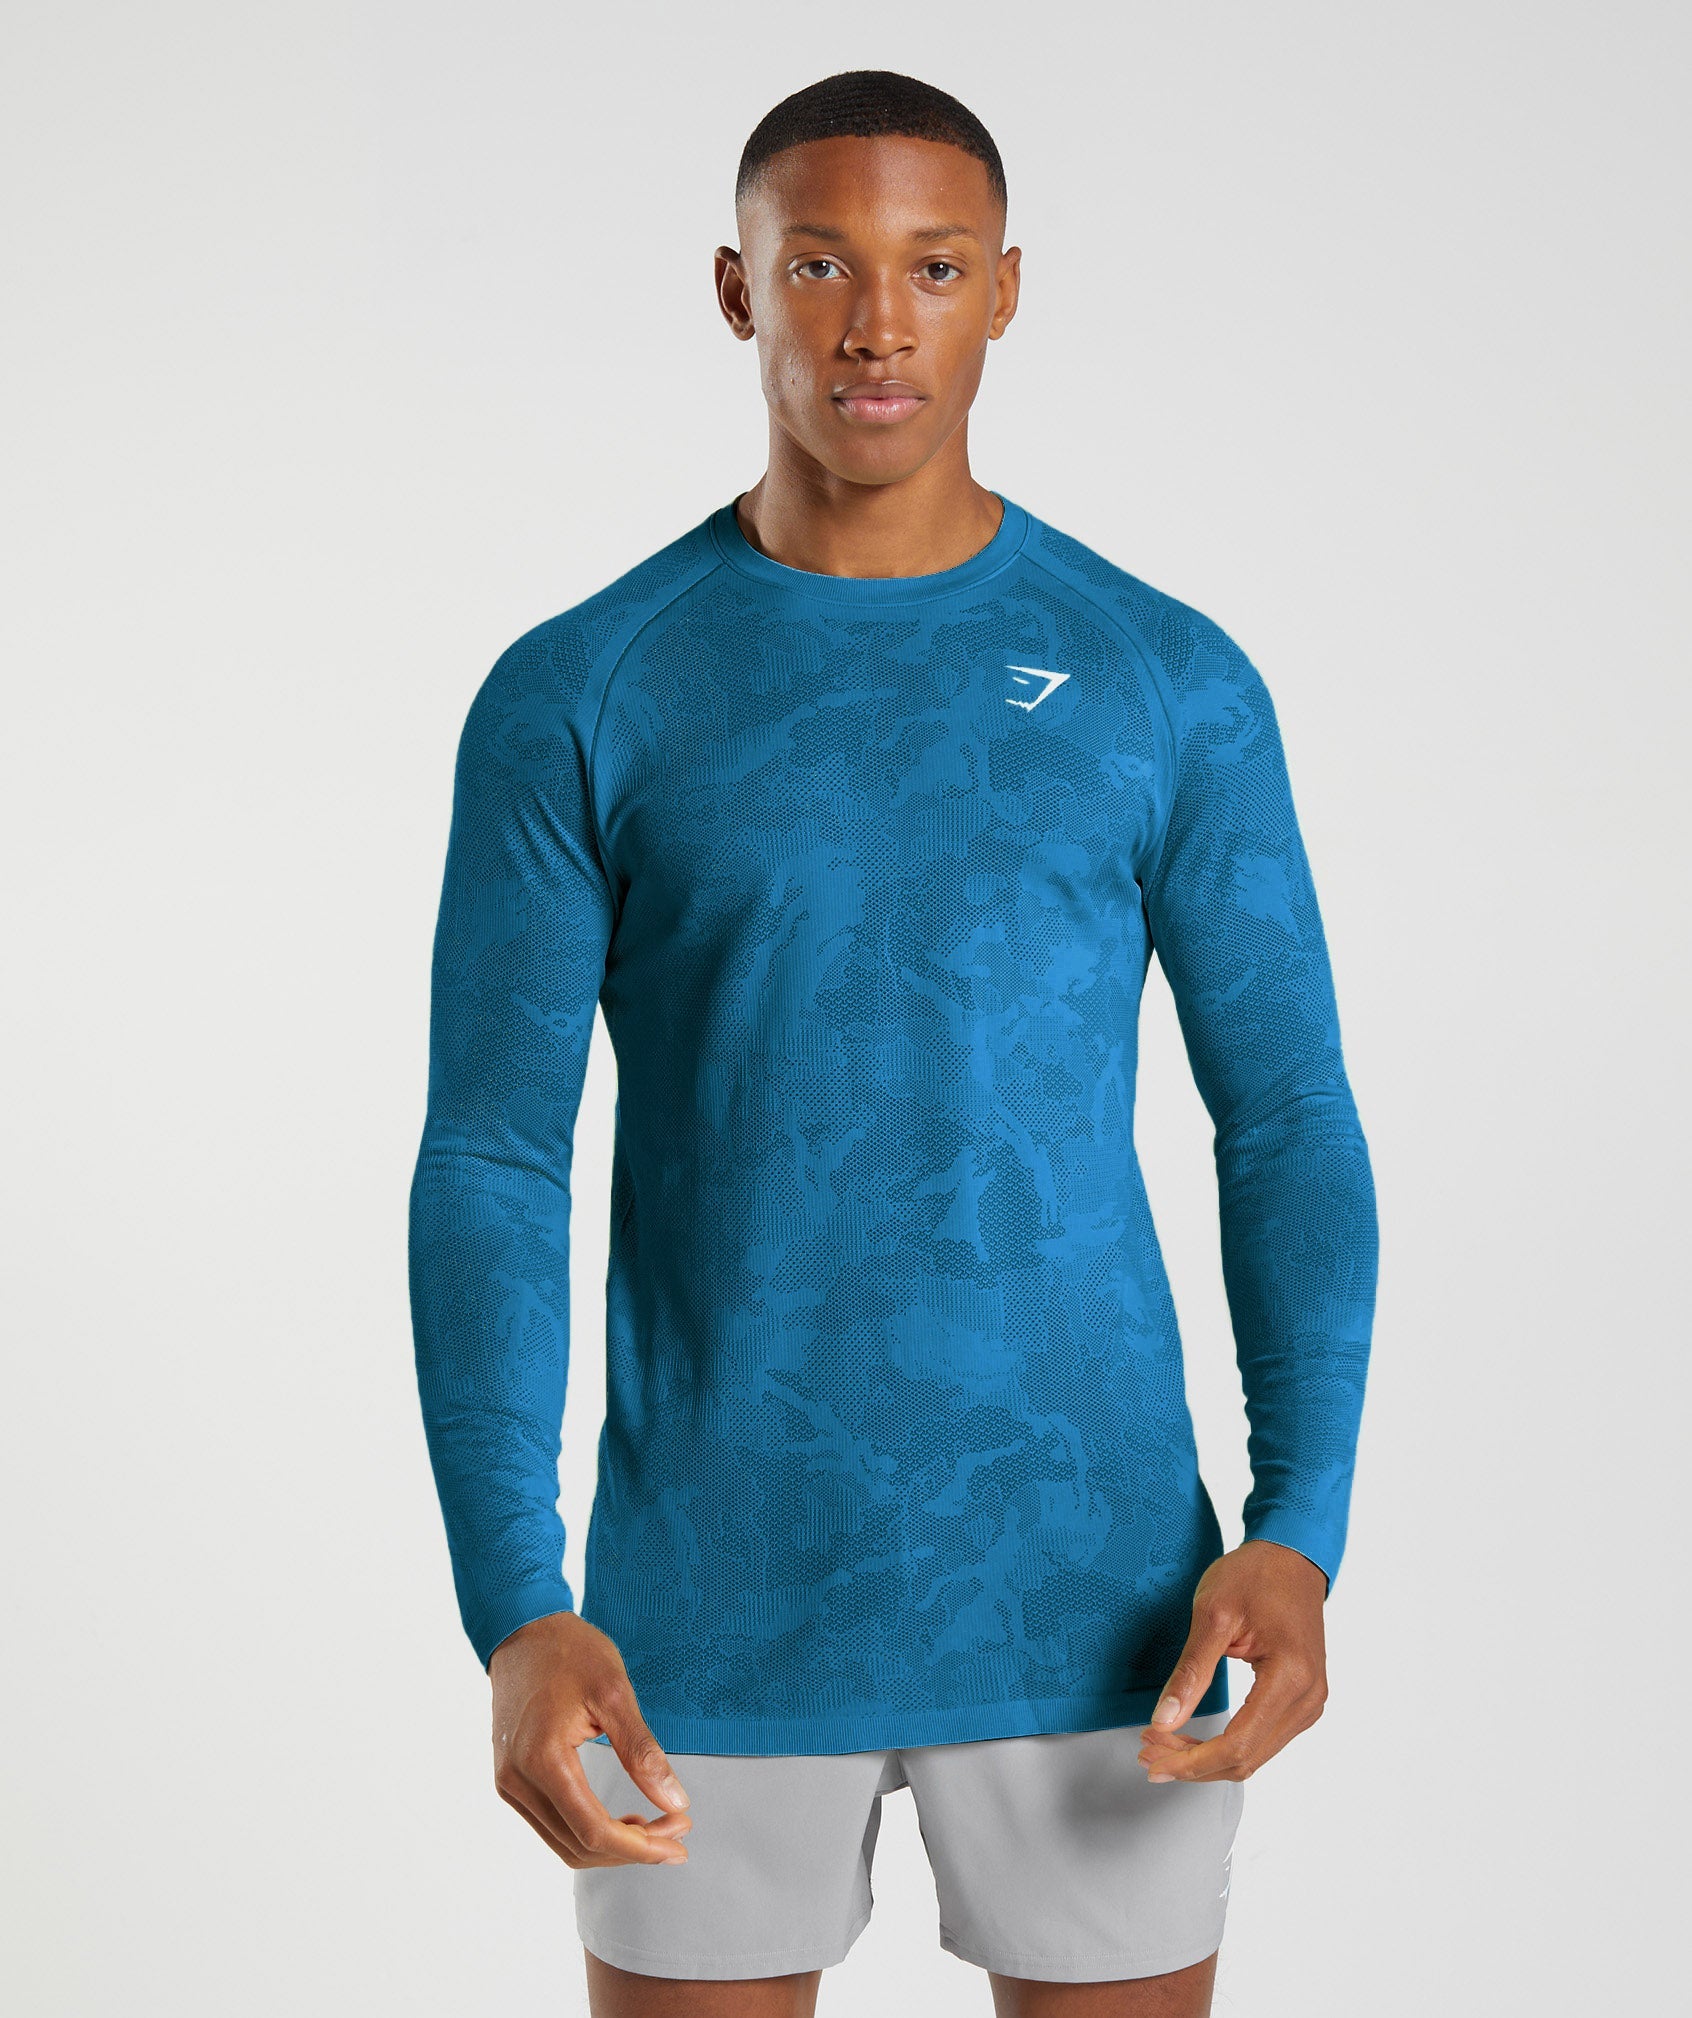 Gymshark Geo Seamless T-Shirt - Navy/Fog Blue